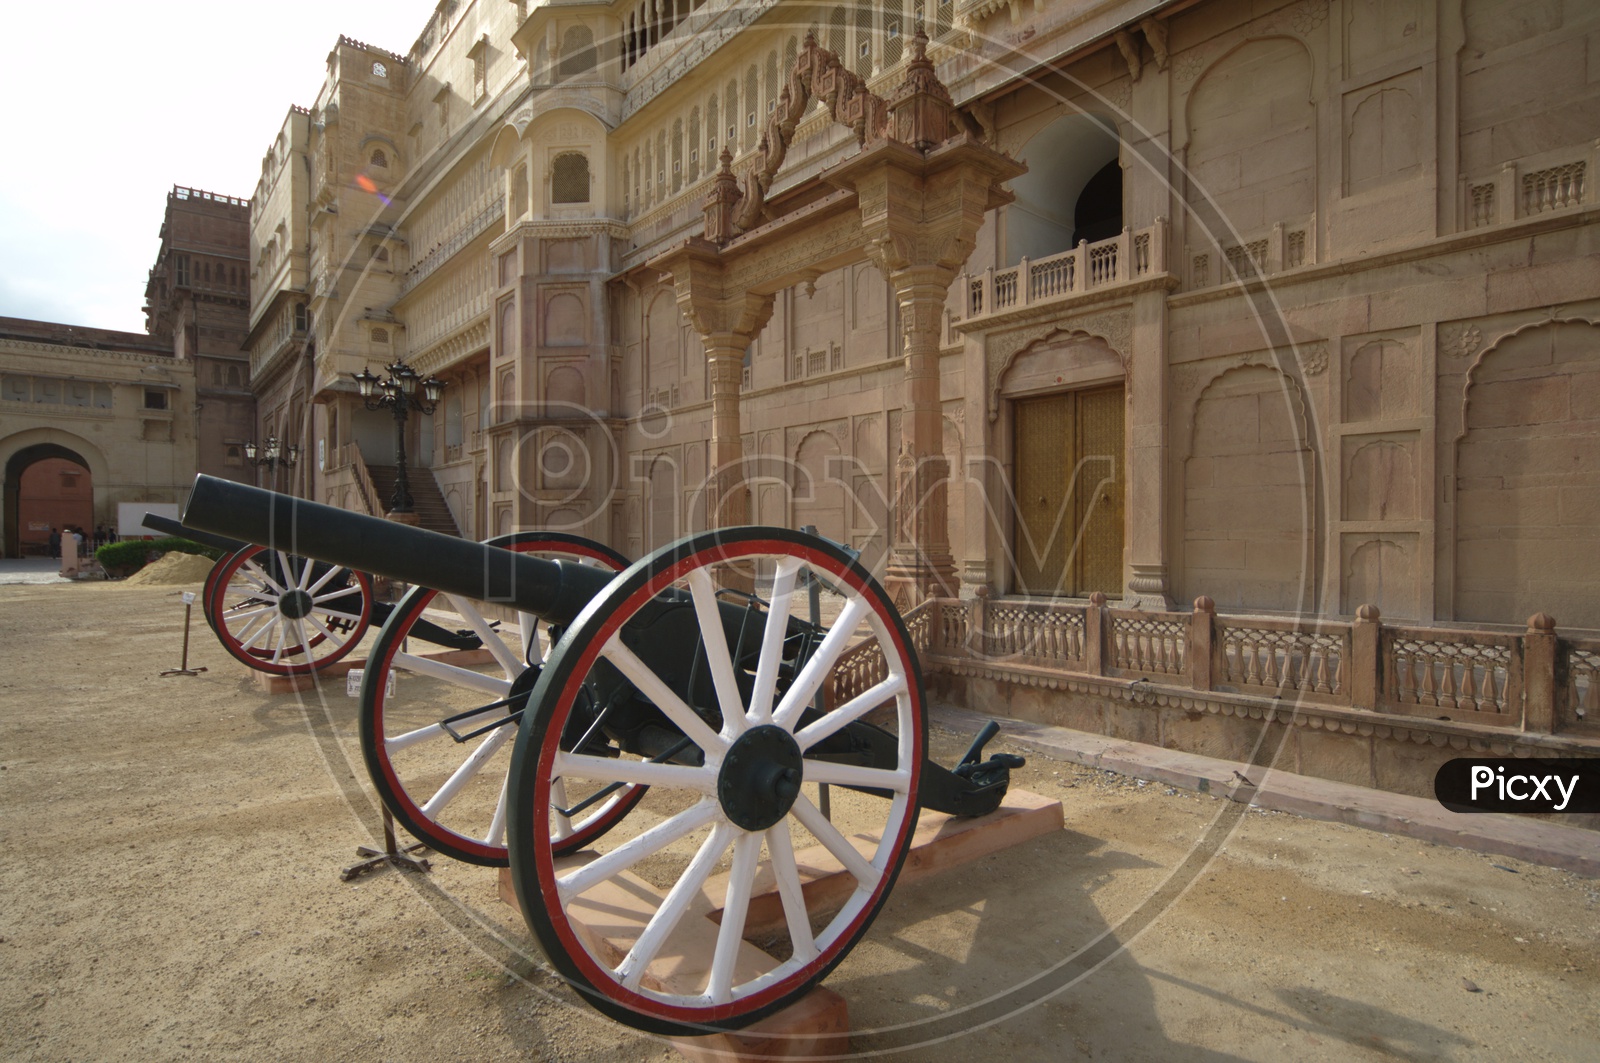 Cannons at Junagarh fort